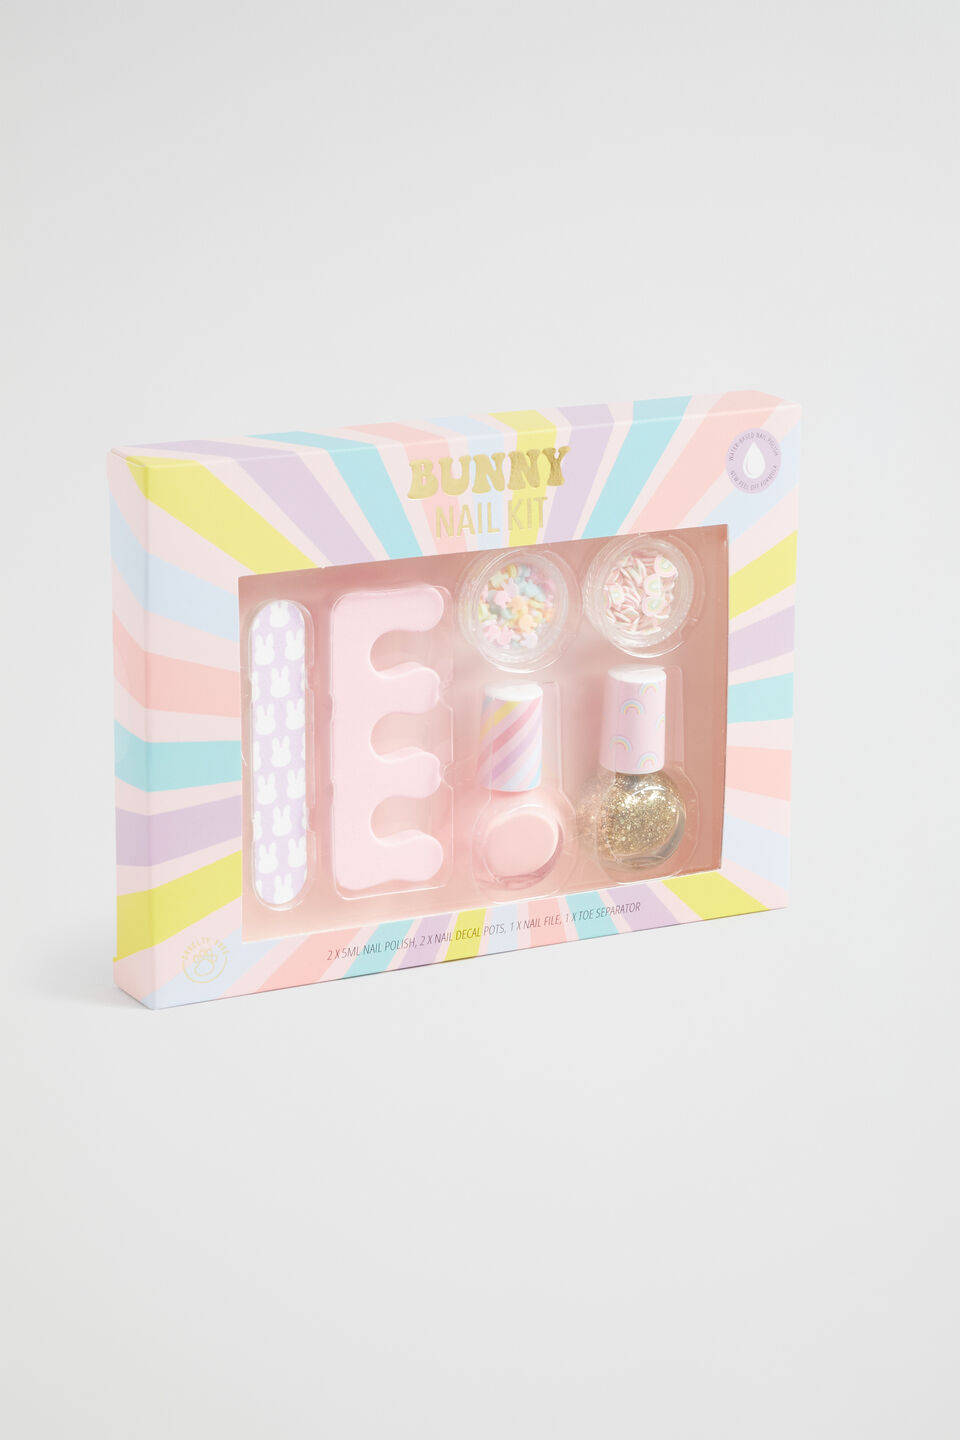 Bunny Rainbow Nail Kit  Multi